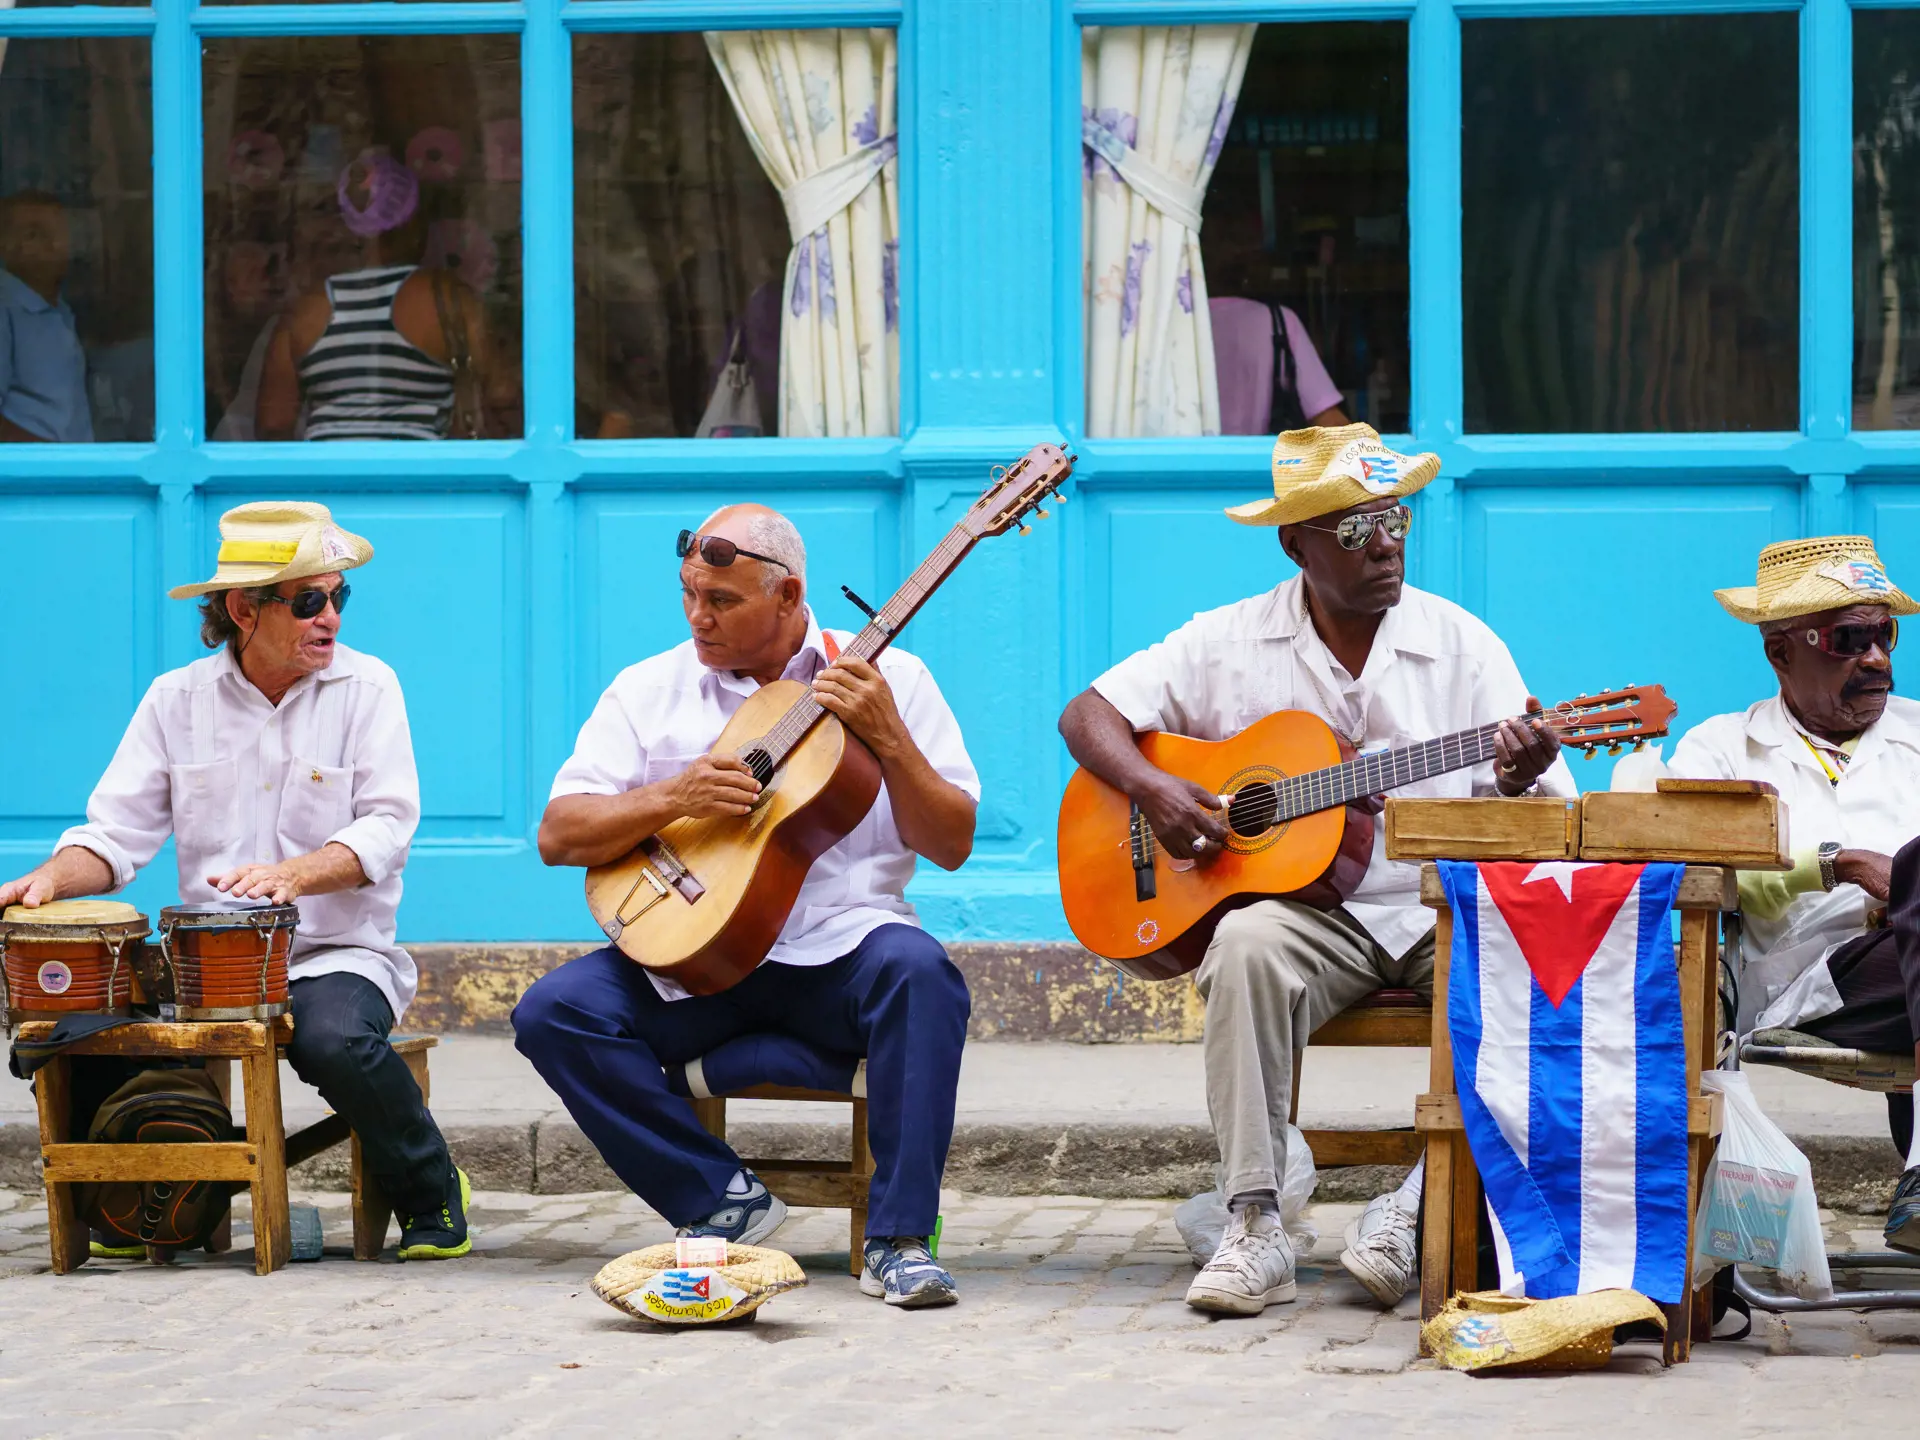 Gademusikanter i Havannas gamle bydel